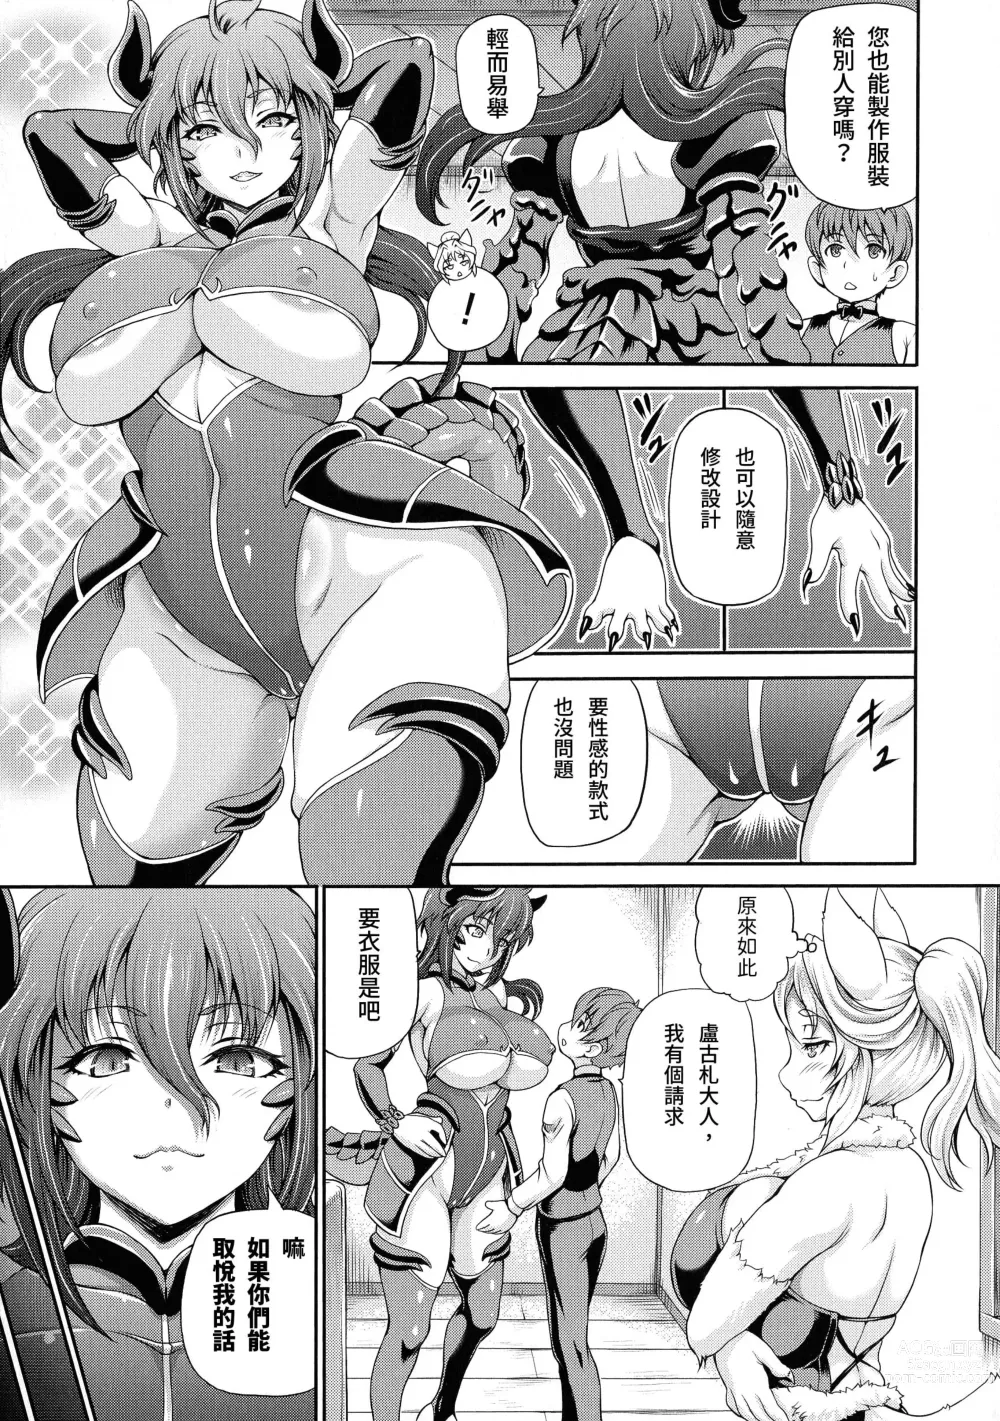 Page 7 of manga Isekai Shoukan 2 Ch. 1-4, 6-8